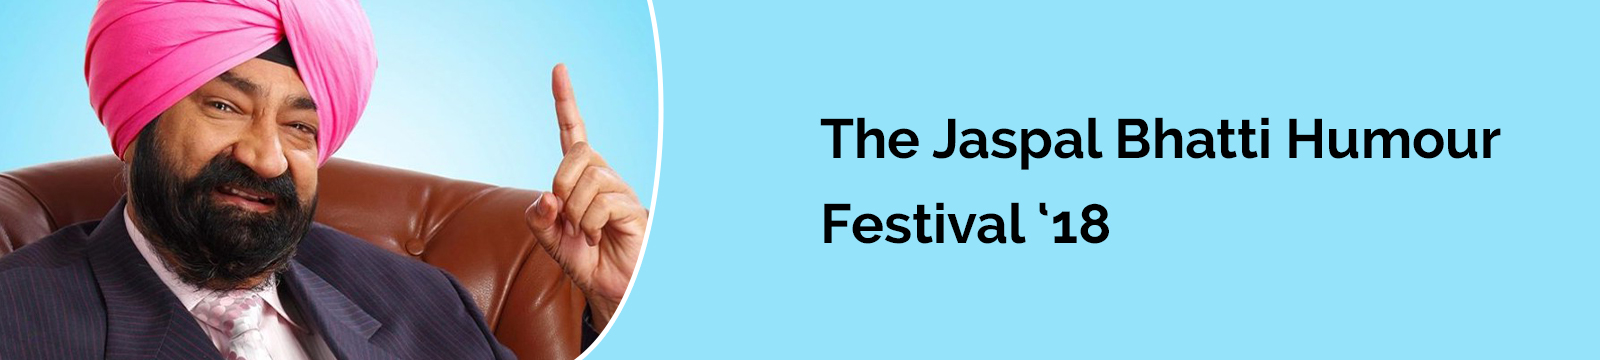 The Jaspal Bhatti Humour Festival ‘18